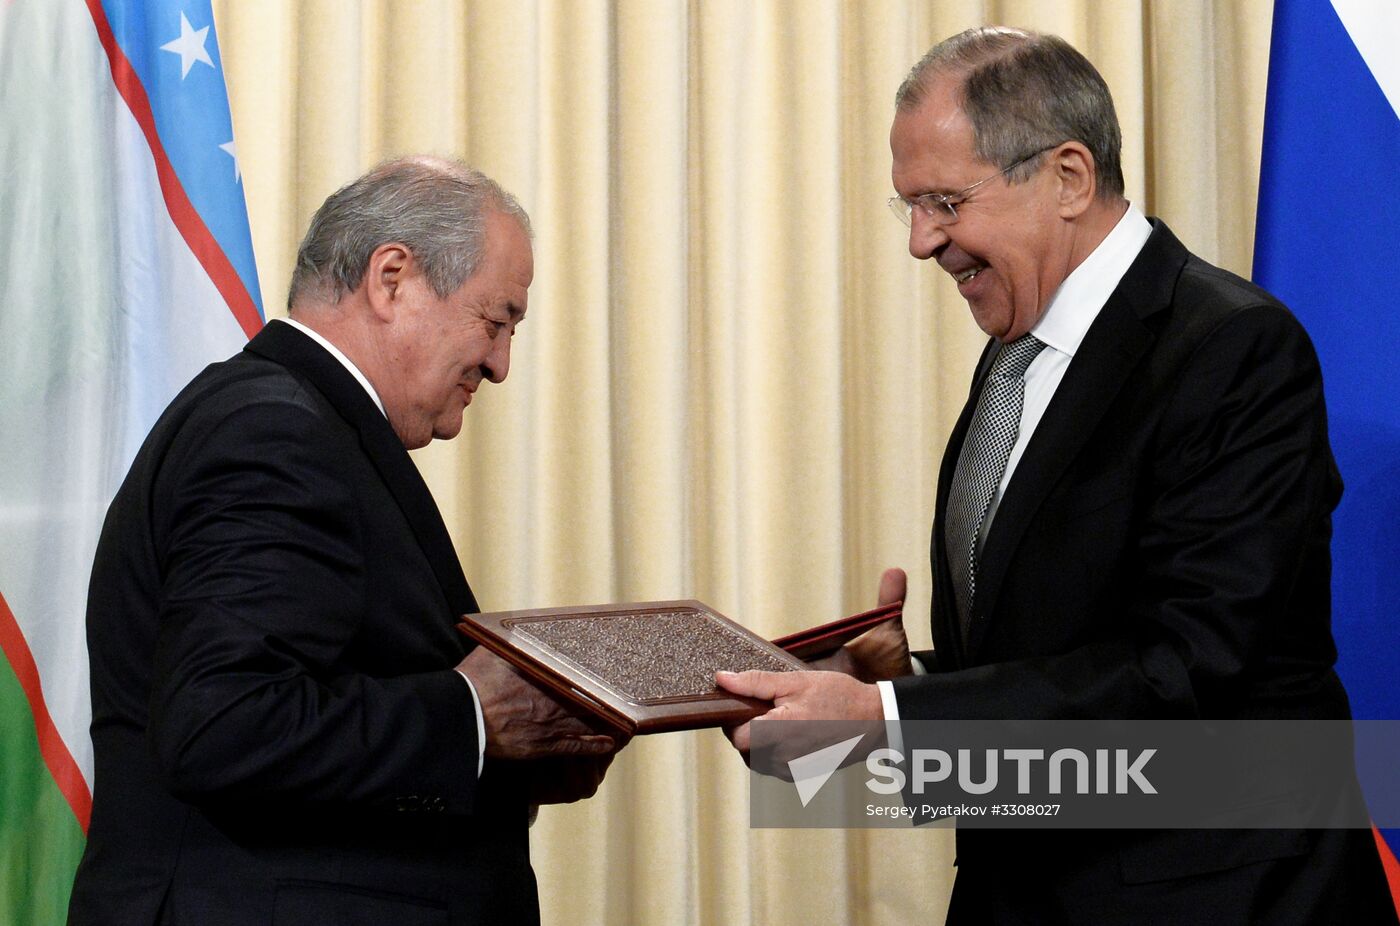 Russia's Foreign Minister Sergey Lavrov meets with Uzbekistan's Foreign Minister Abdulaziz Kamilov